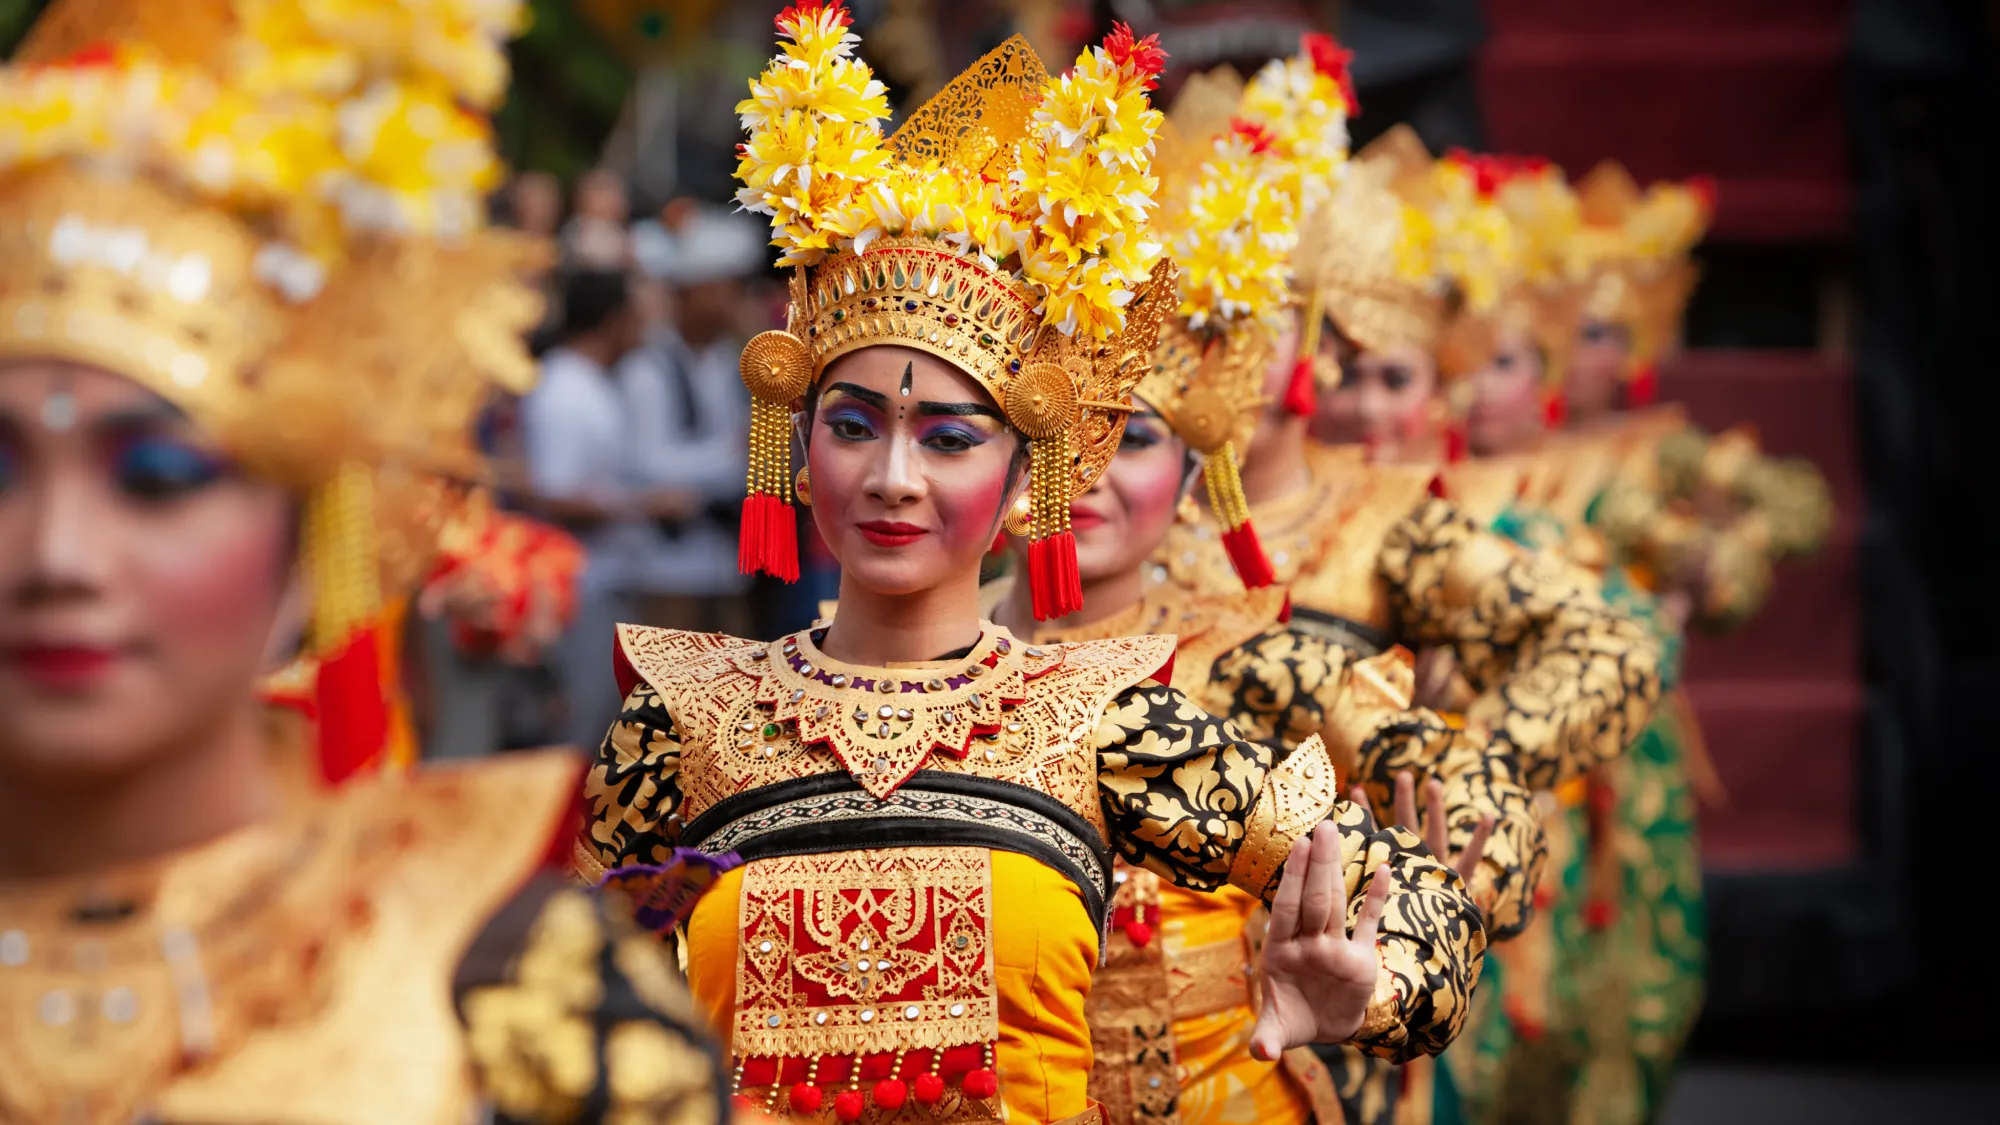 Danse traditionnelle, Bali, Indonésie © Alila Hotels